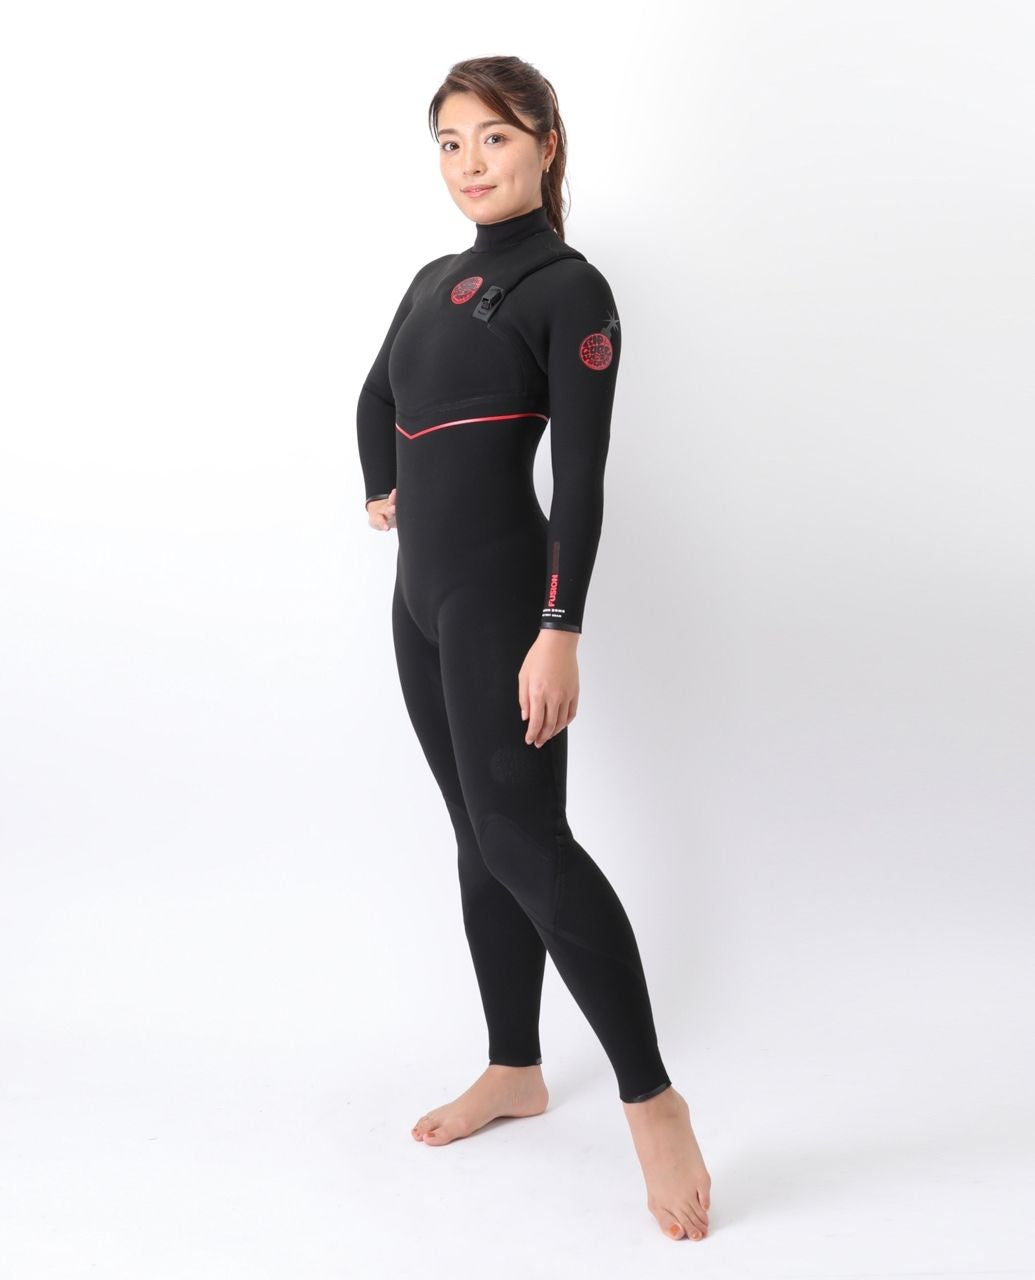 [Winter] Women's F BOMB FUSION 5/3mm zip-free semi-dry wetsuit 